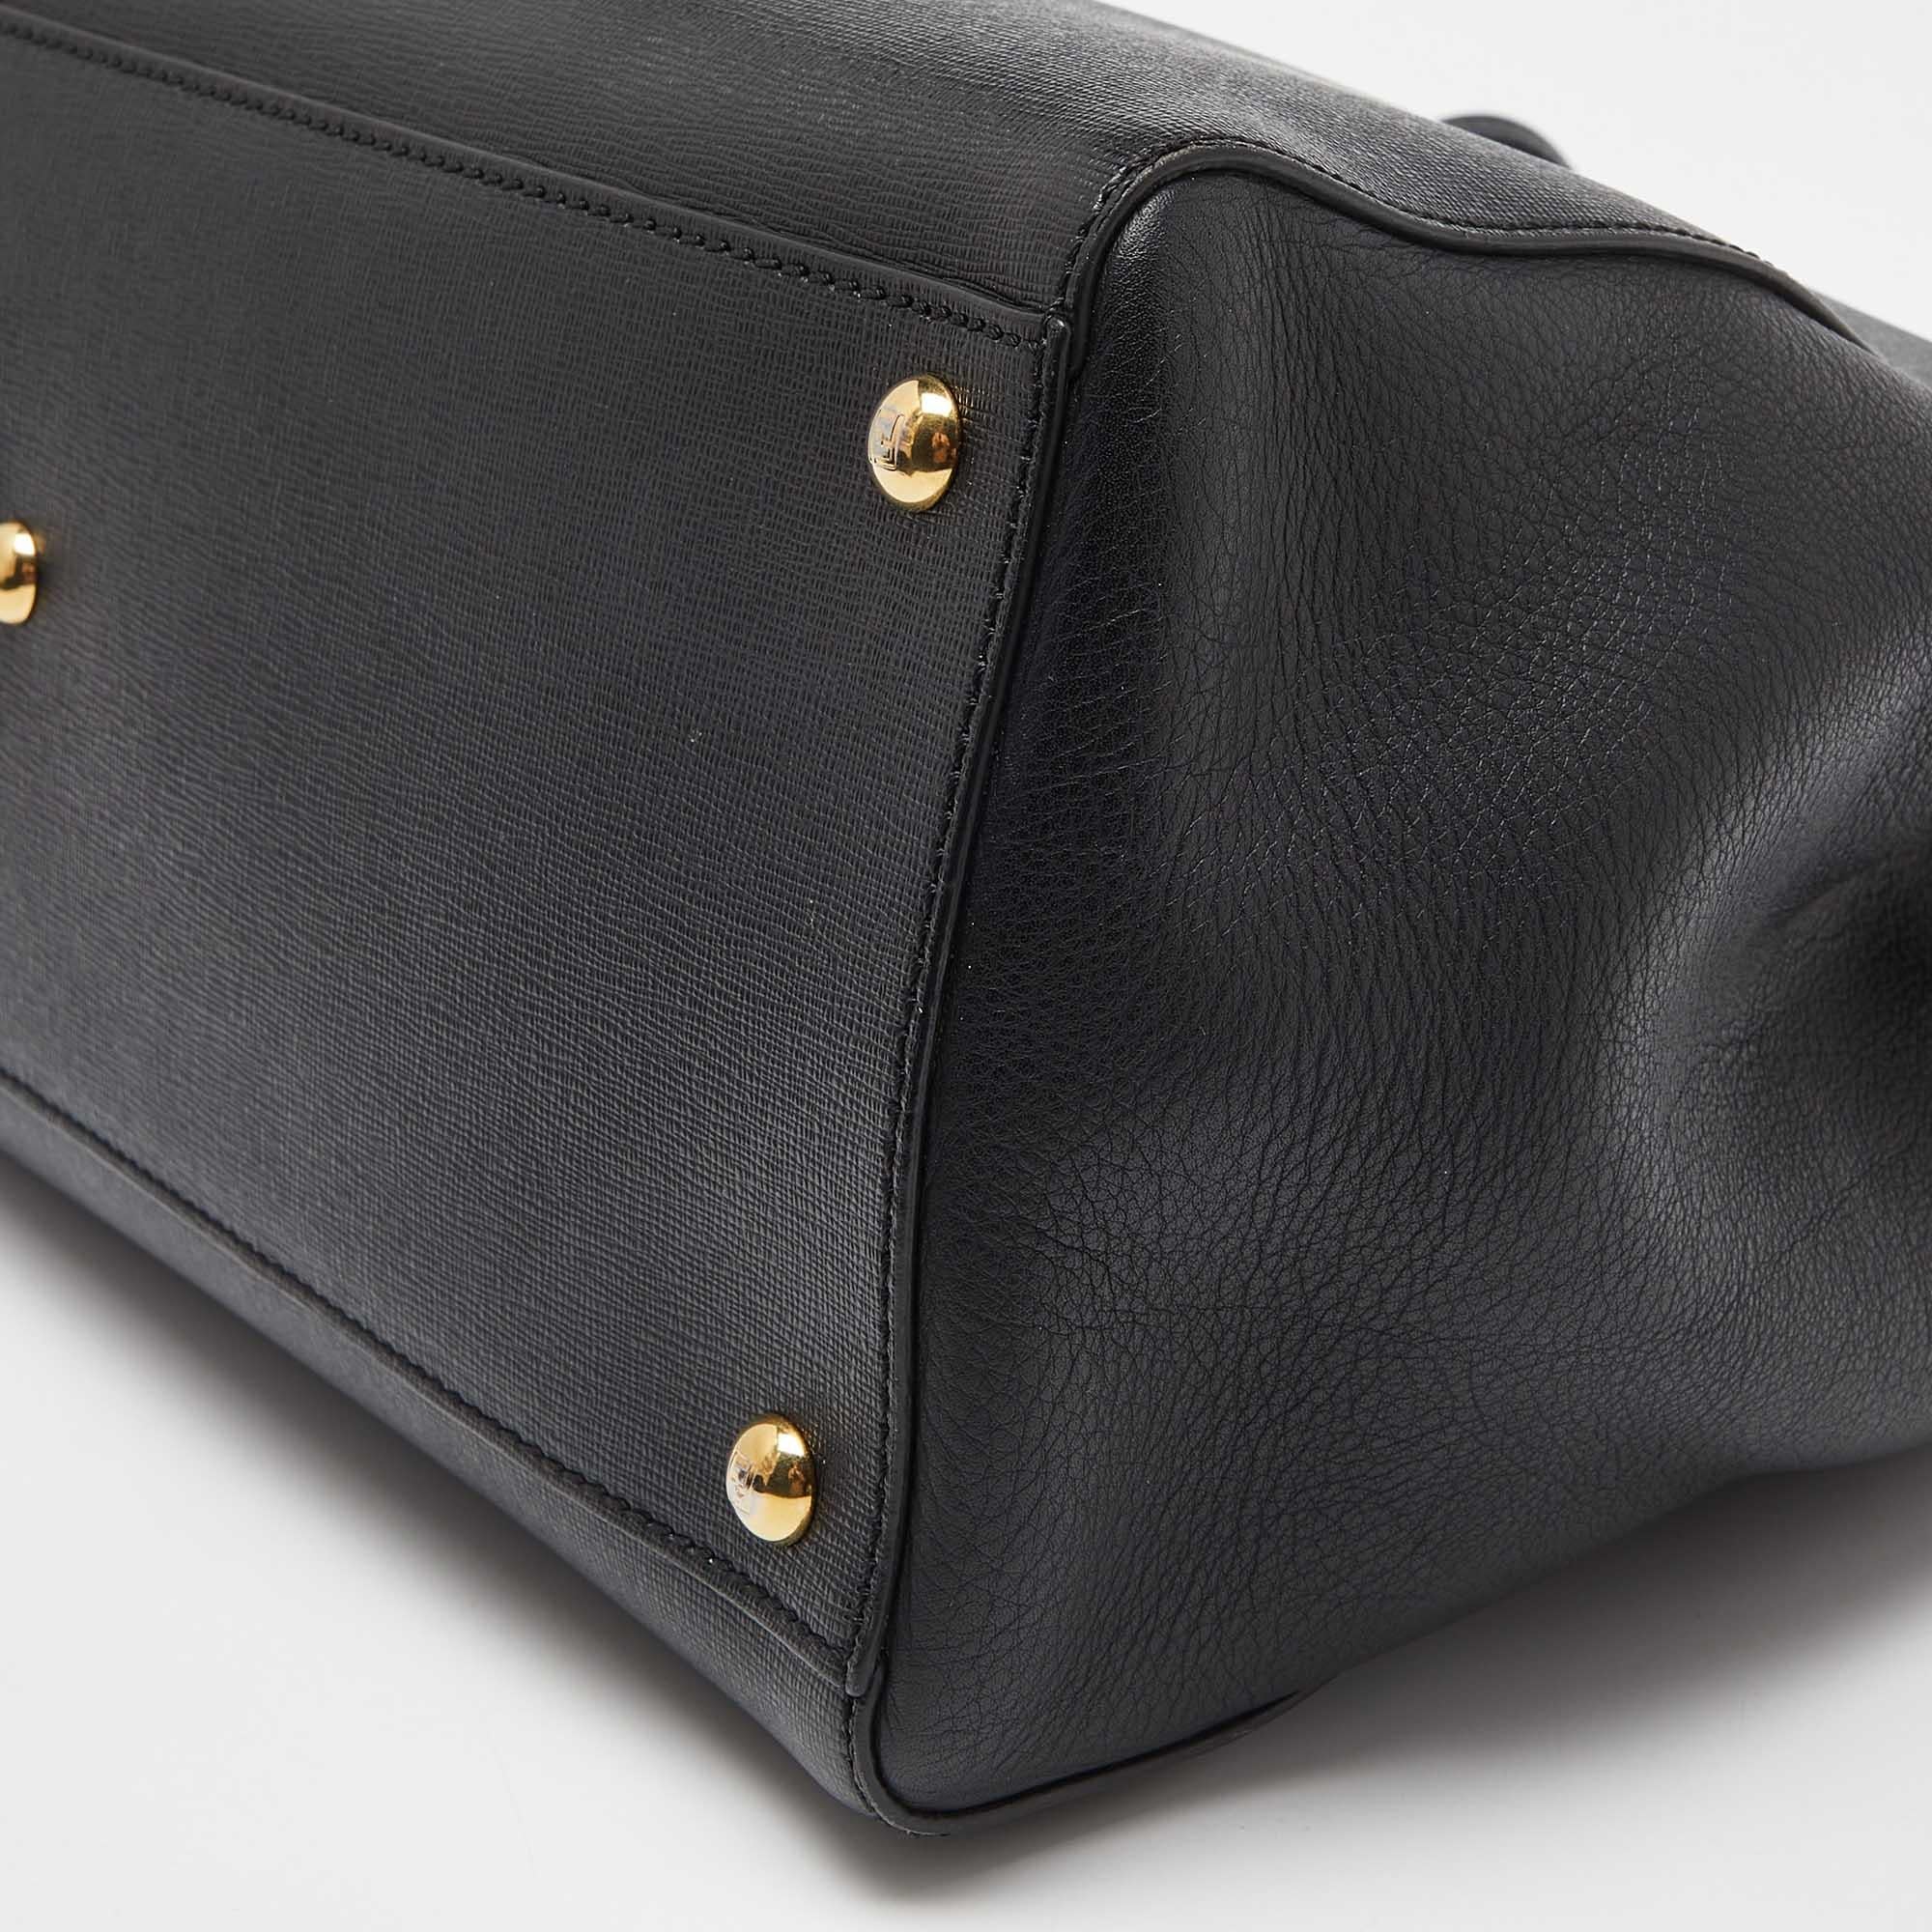 Fendi Black Leather Medium 2Jours Tote For Sale 7